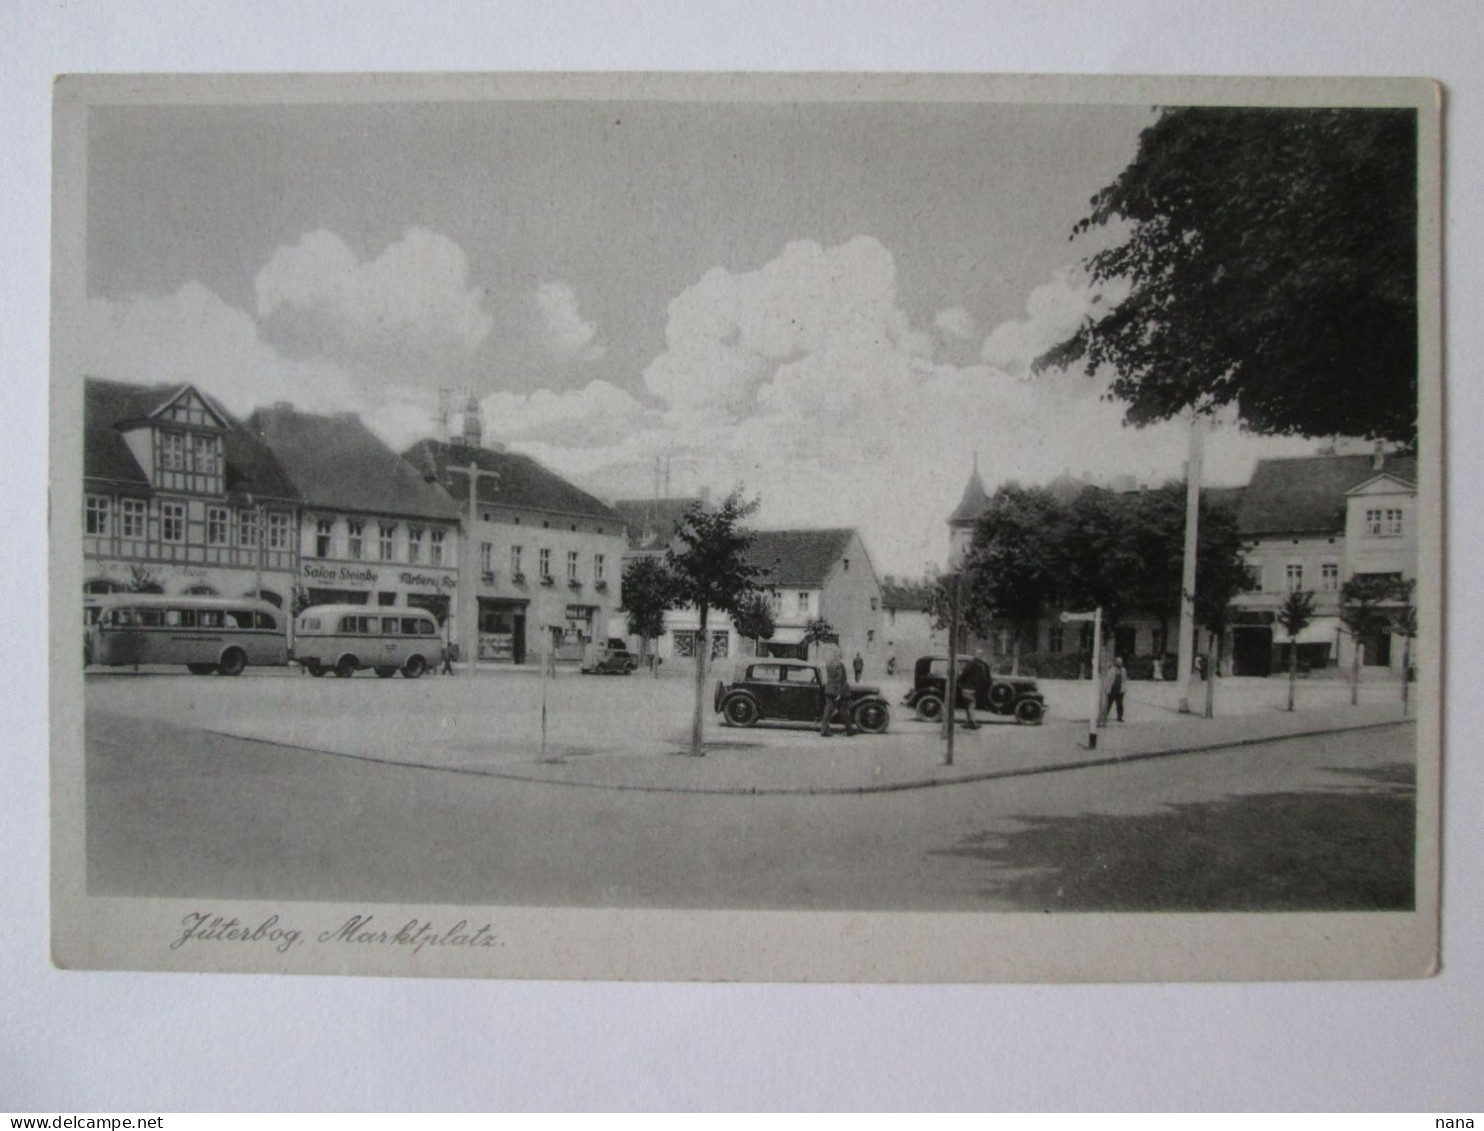 Germany-Juterbog/Jueterbog:Marktplatz/Marche Carte Post.vers 1940/Marketplace Postcard 1940s - Jueterbog